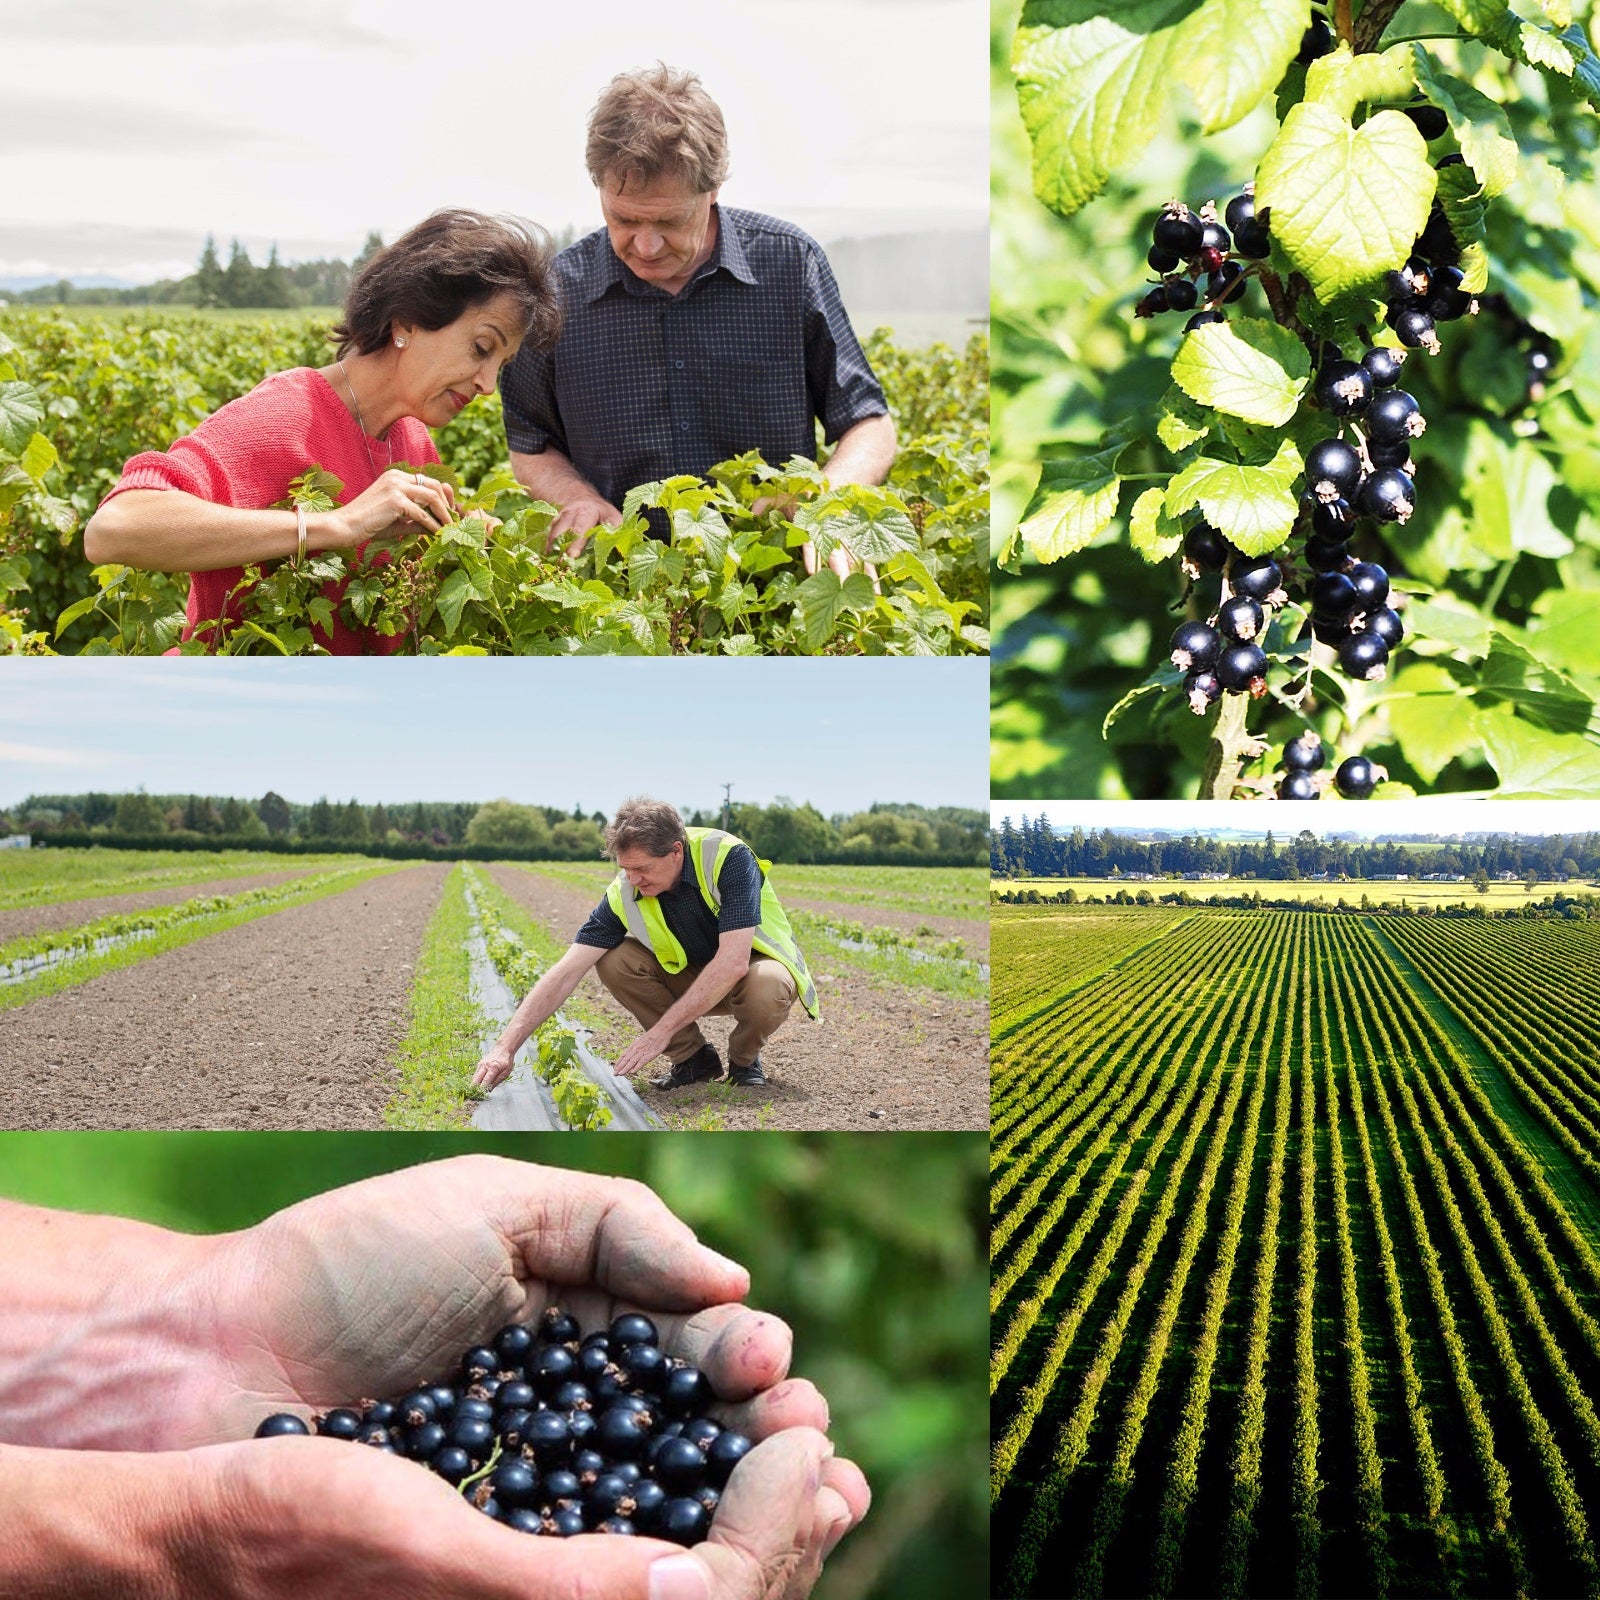 Certified Organic Frozen Blackcurrants from New Zealand (350g-3.15kg) - Horizon Farms